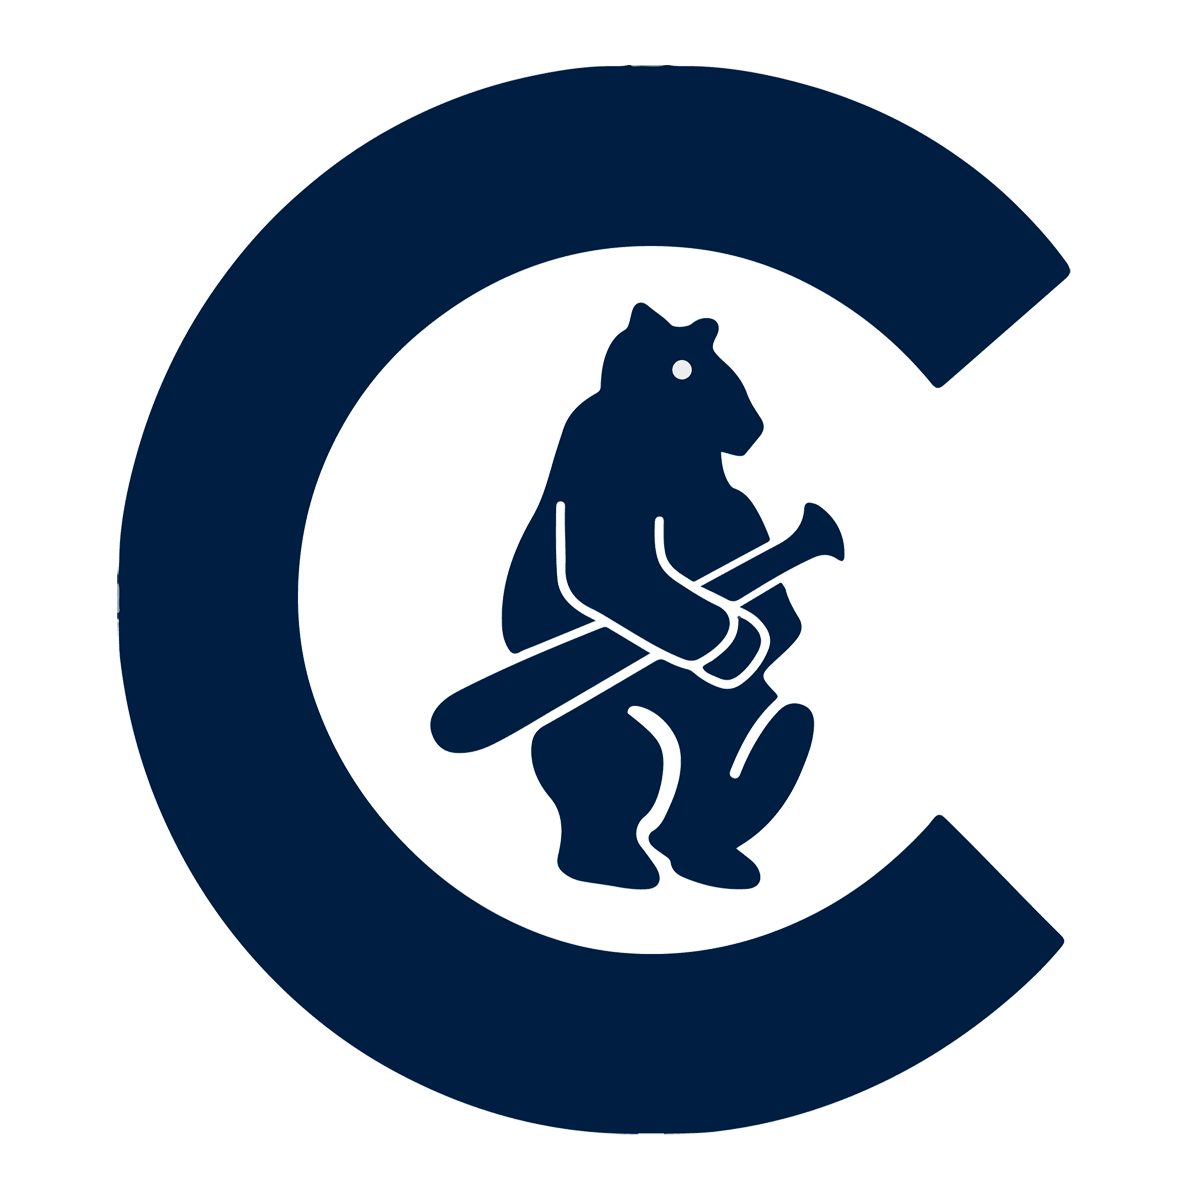 Chicago Cubs logo 1911-1914